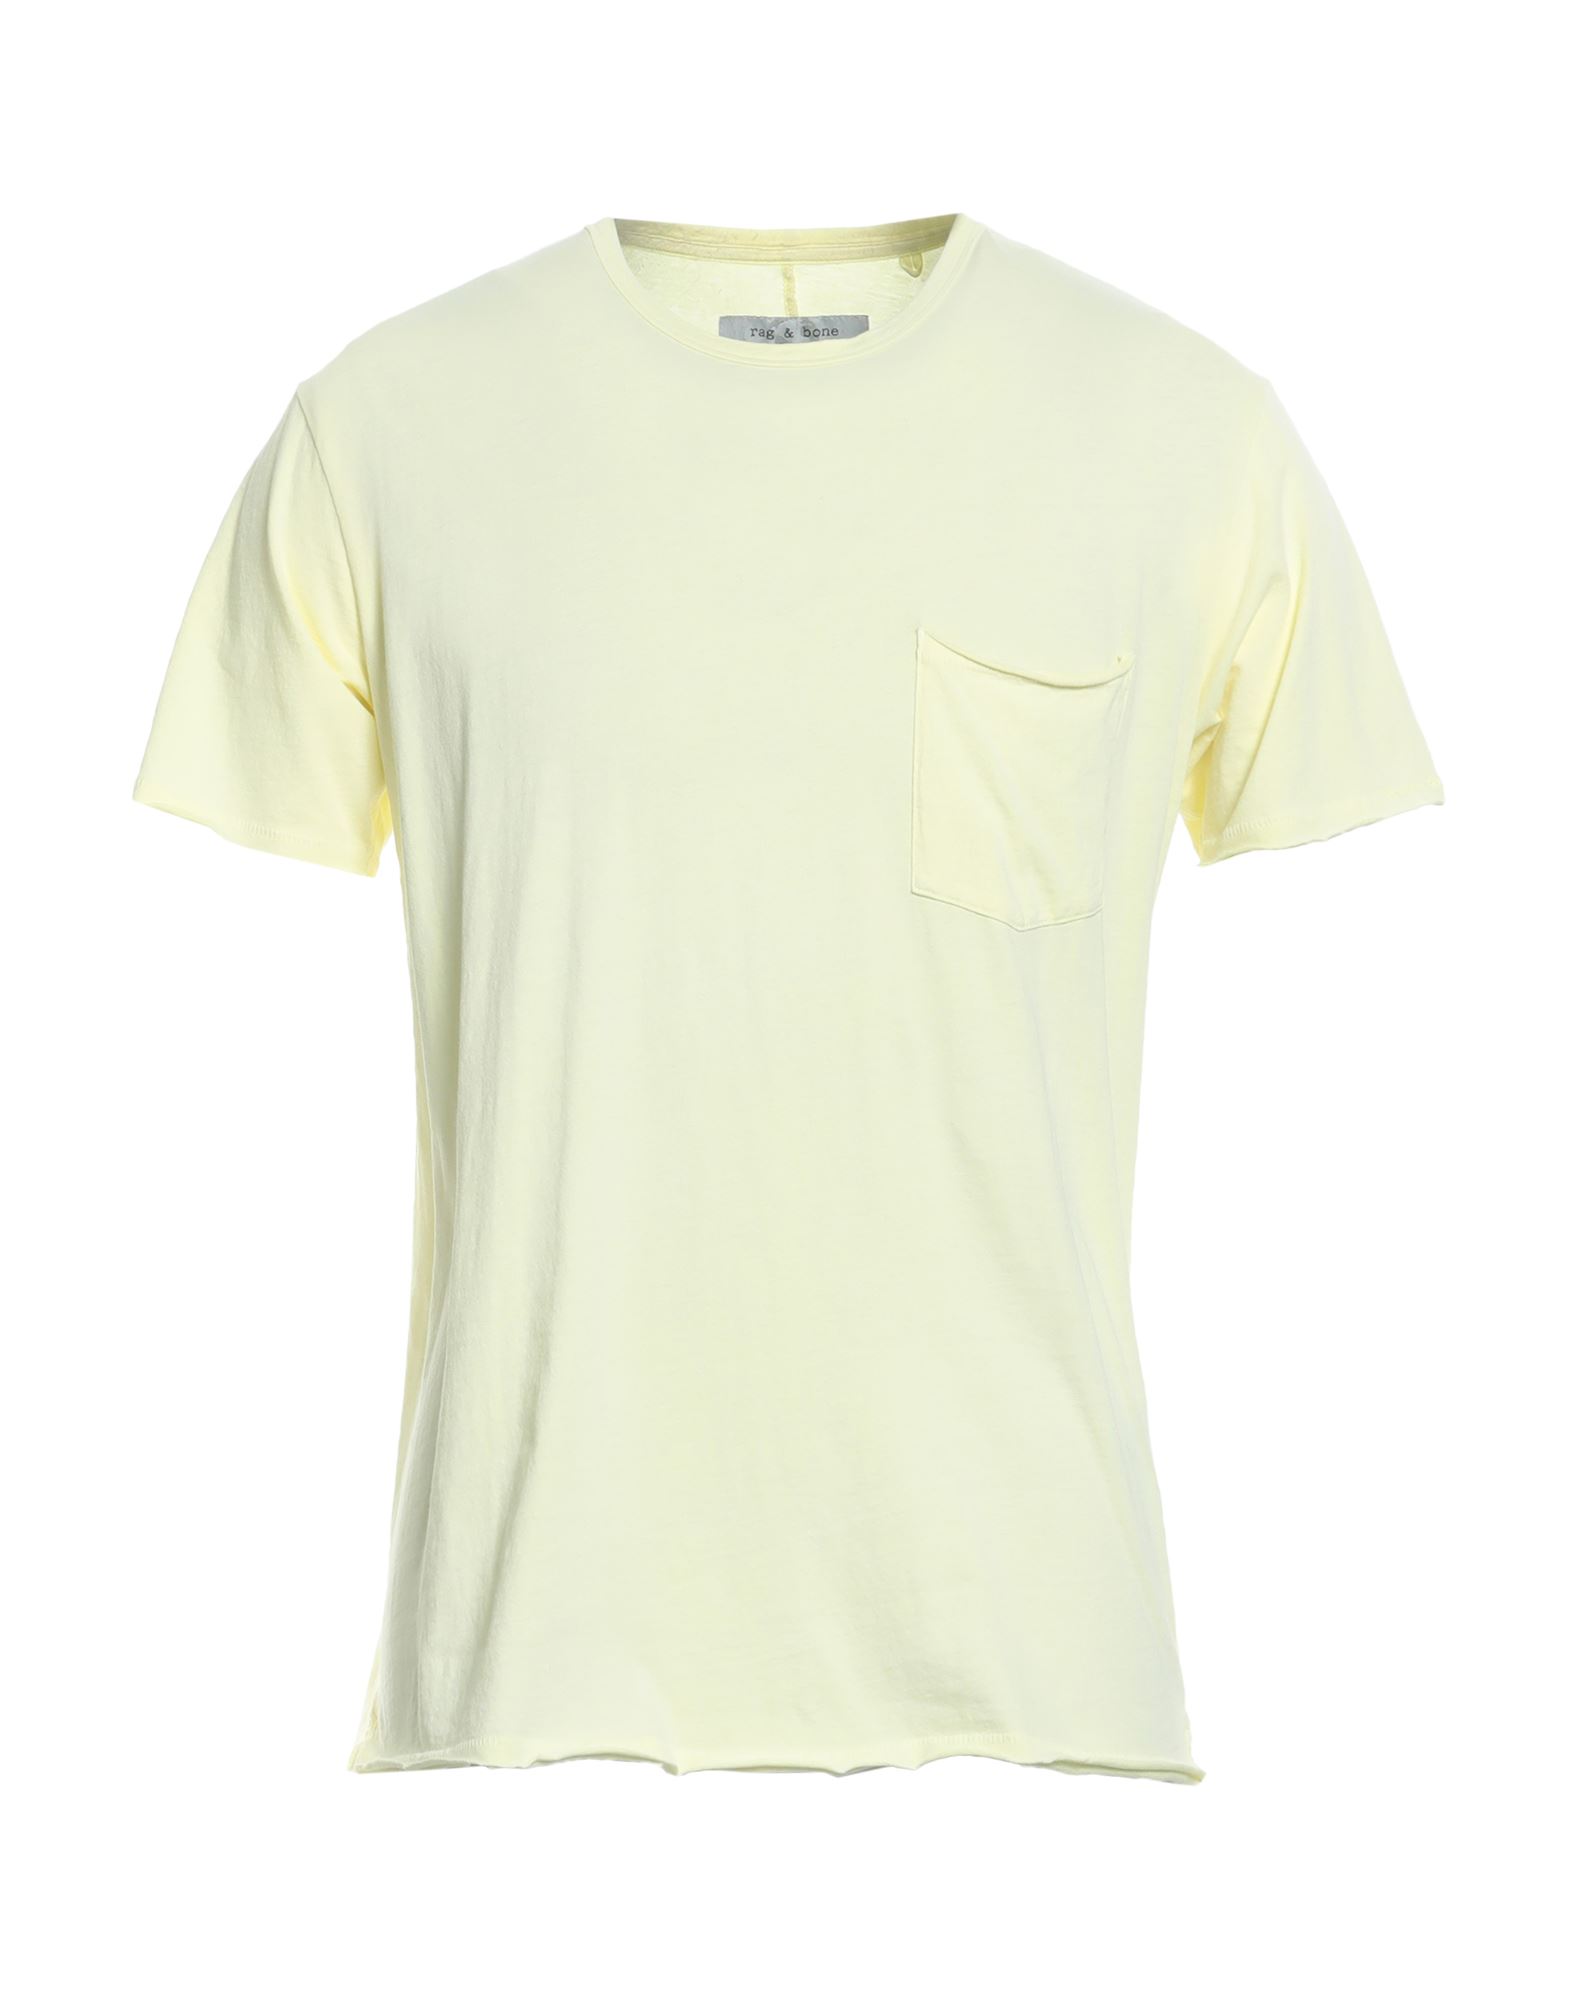 Rag & Bone Man T-shirt Light Yellow Size Xxl Organic Cotton